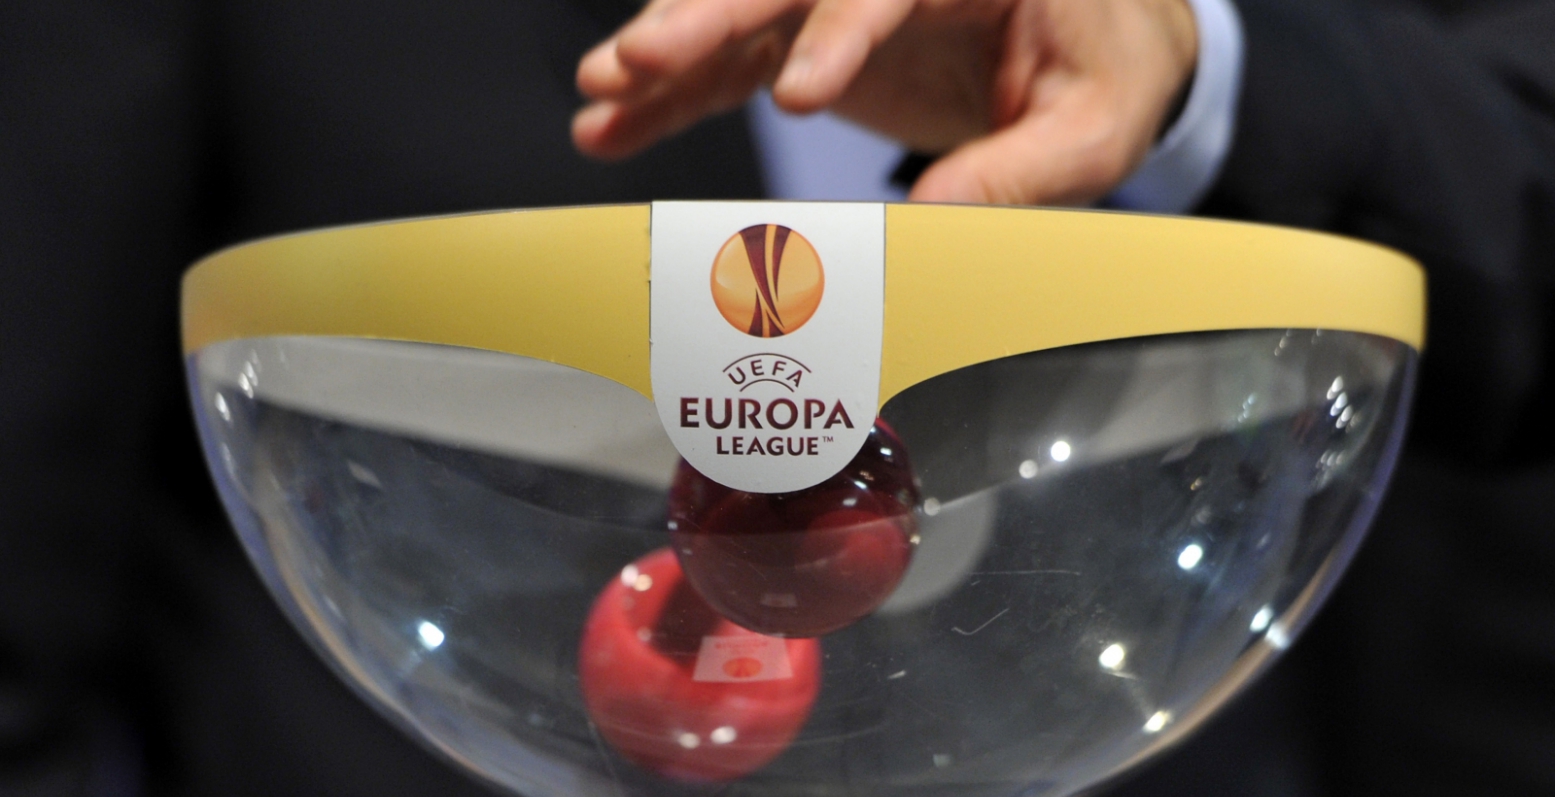 Europa League: Ατυτοί είναι οι πιθανοί αντίπαλοι του Άρη και του Ατρομήτου